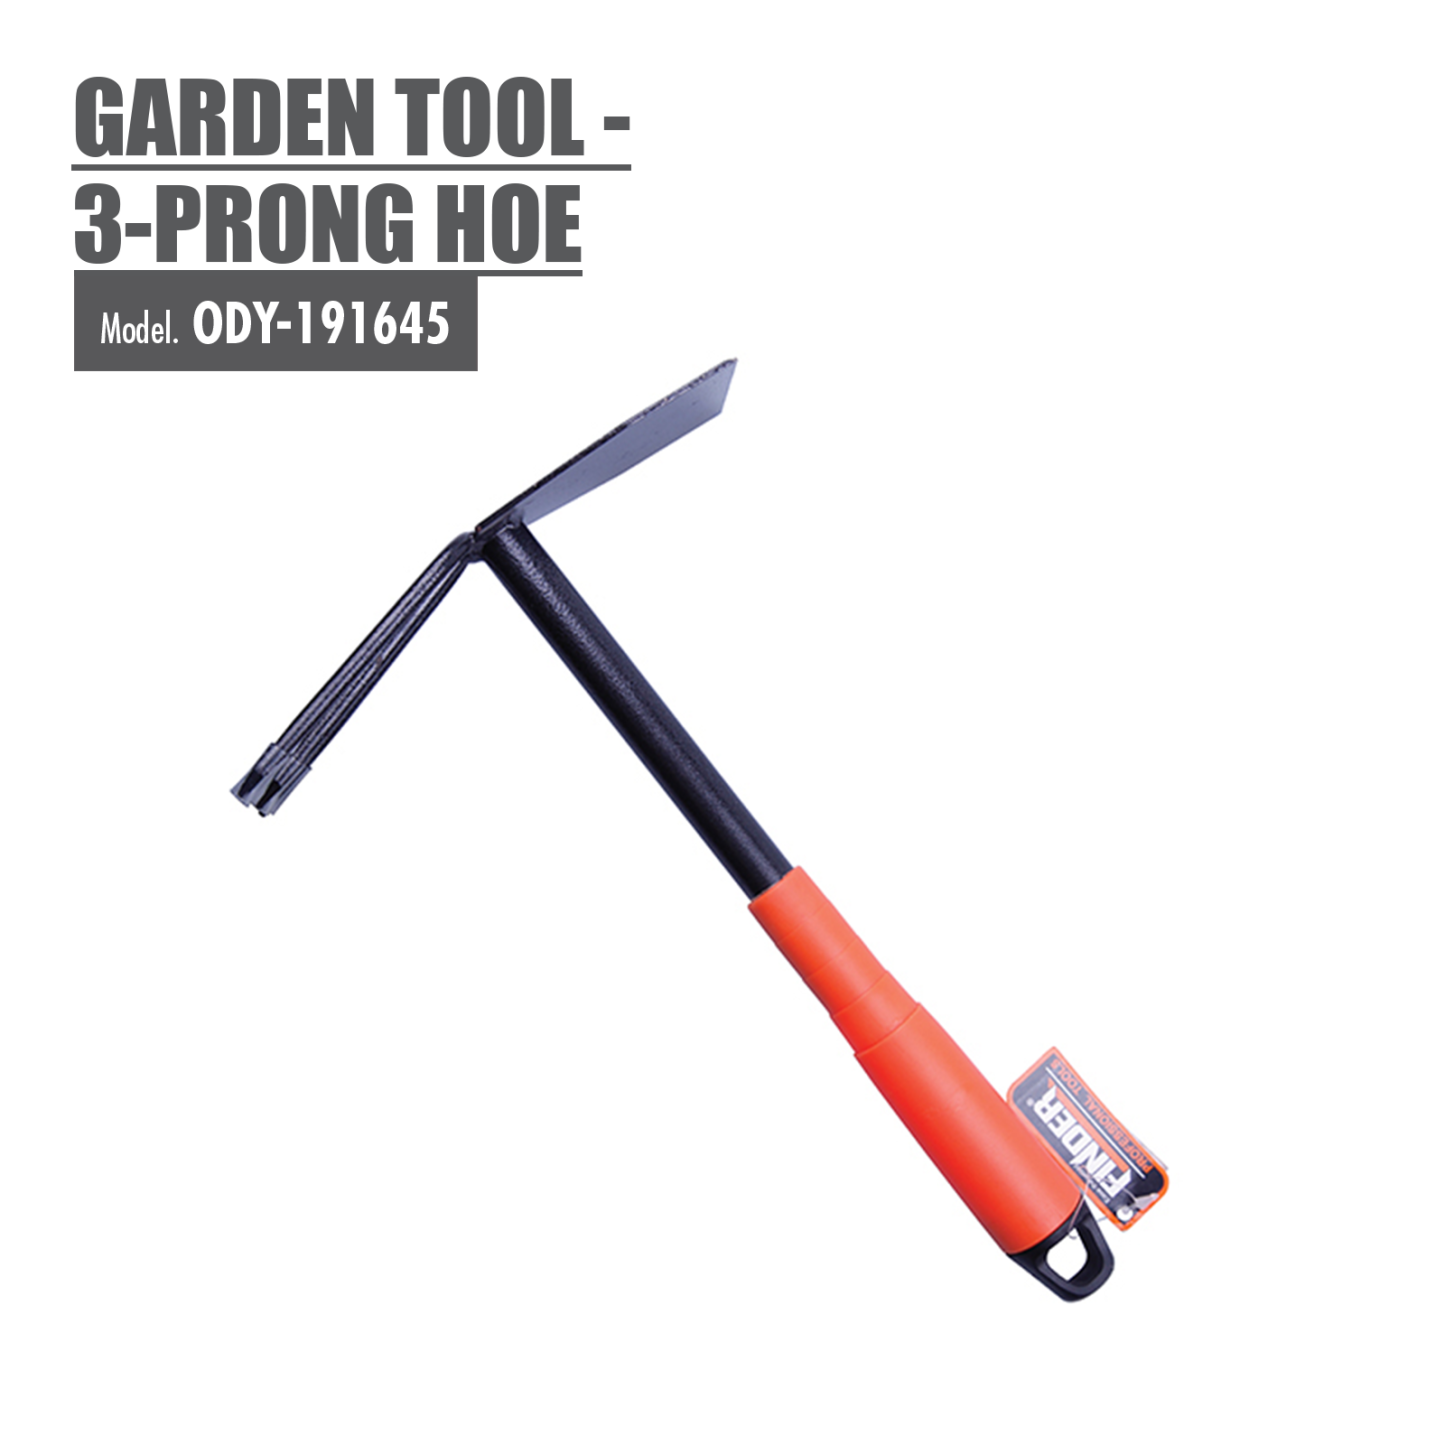 FINDER - Garden Tool - 3-Prong Hoe